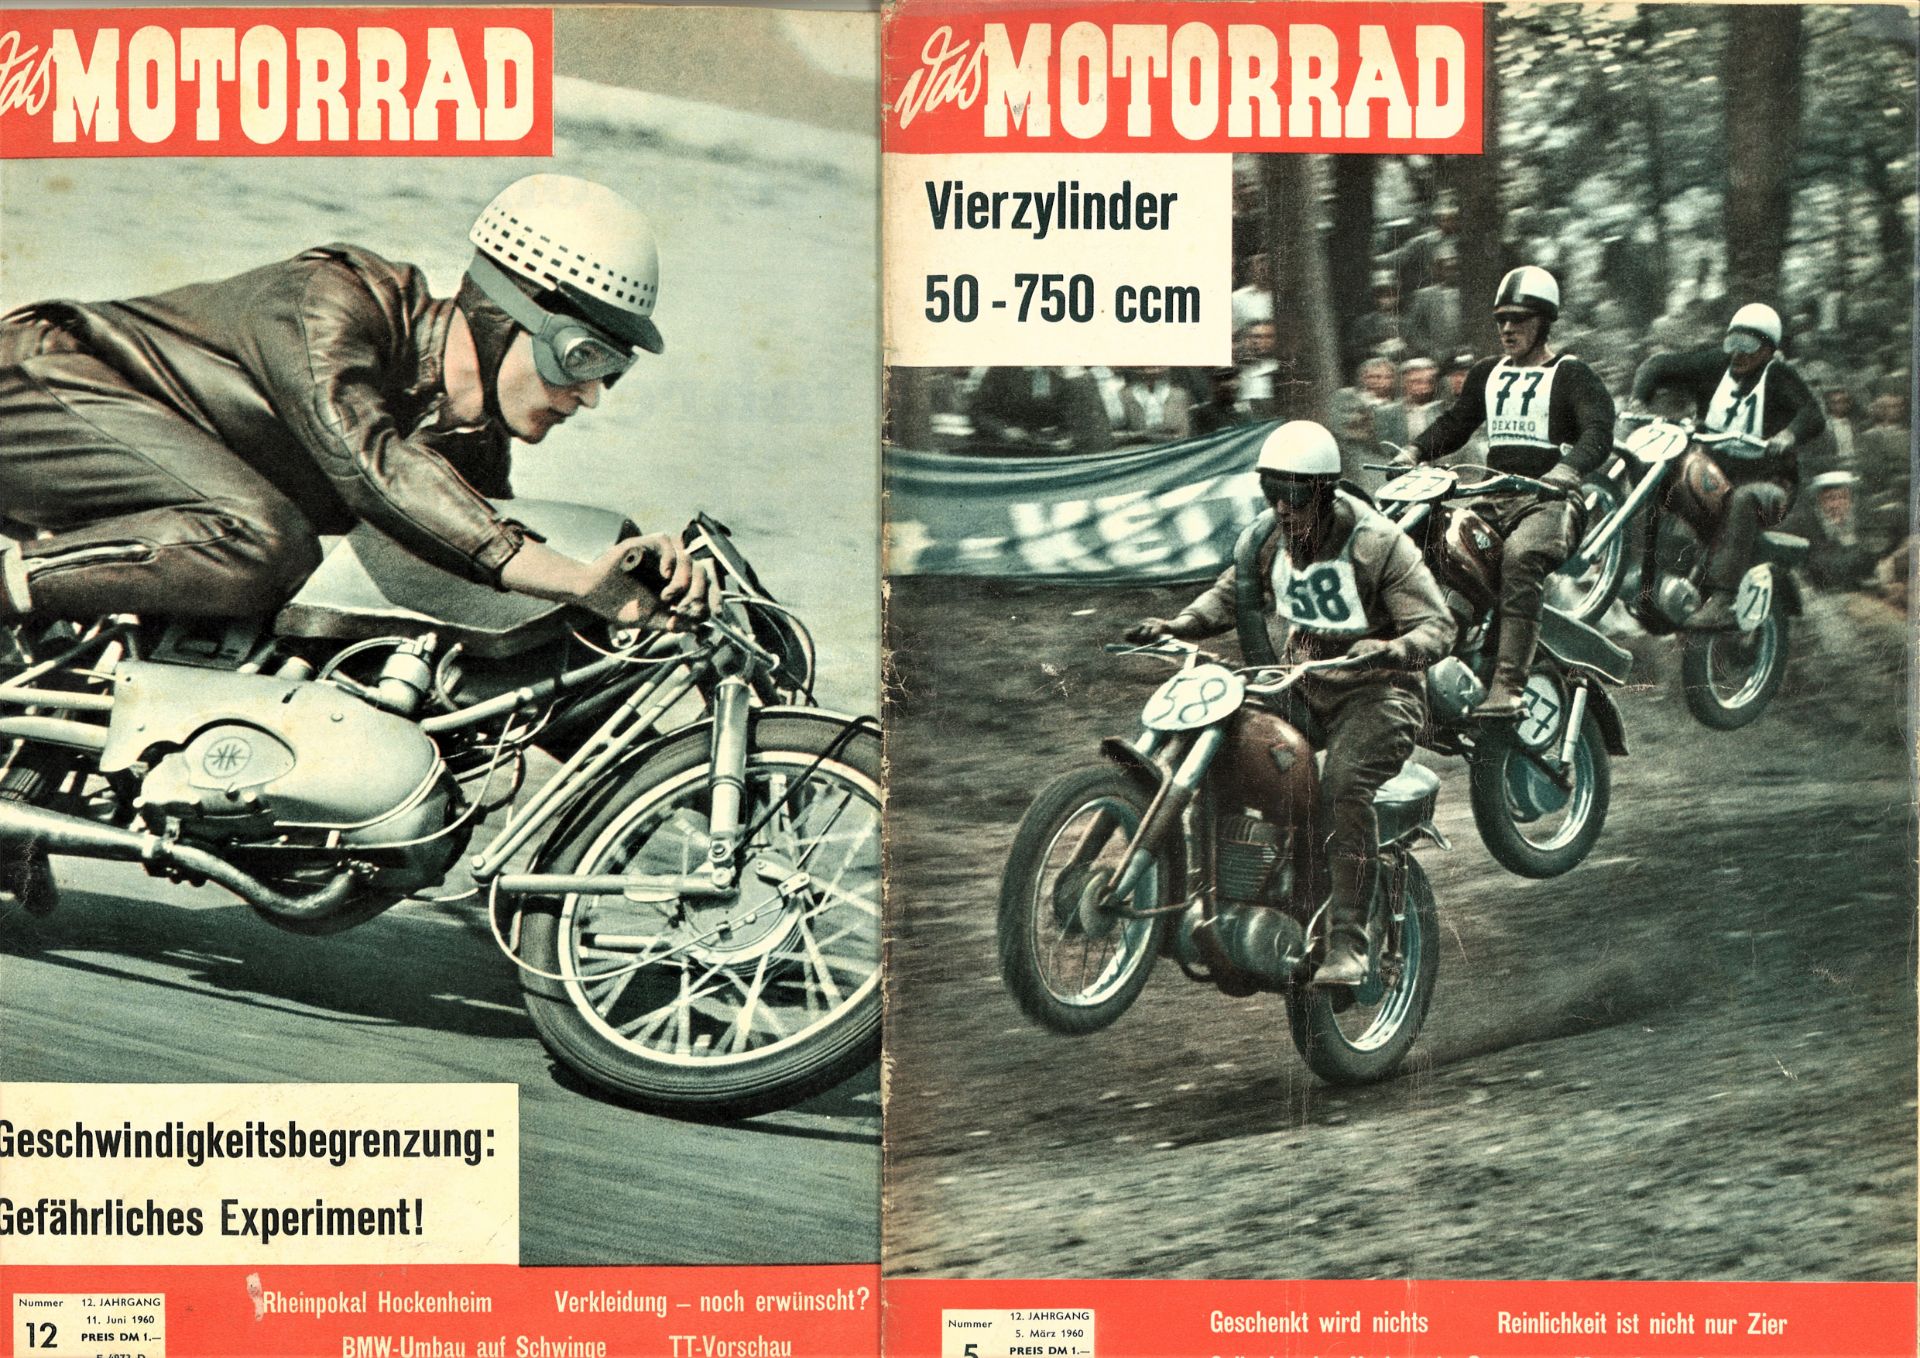 Das Motorrad, Magazin, hier 12. Jahrgang, 1960, Nr. 5, 12, 18, 21, 22, 24, 25 und 26